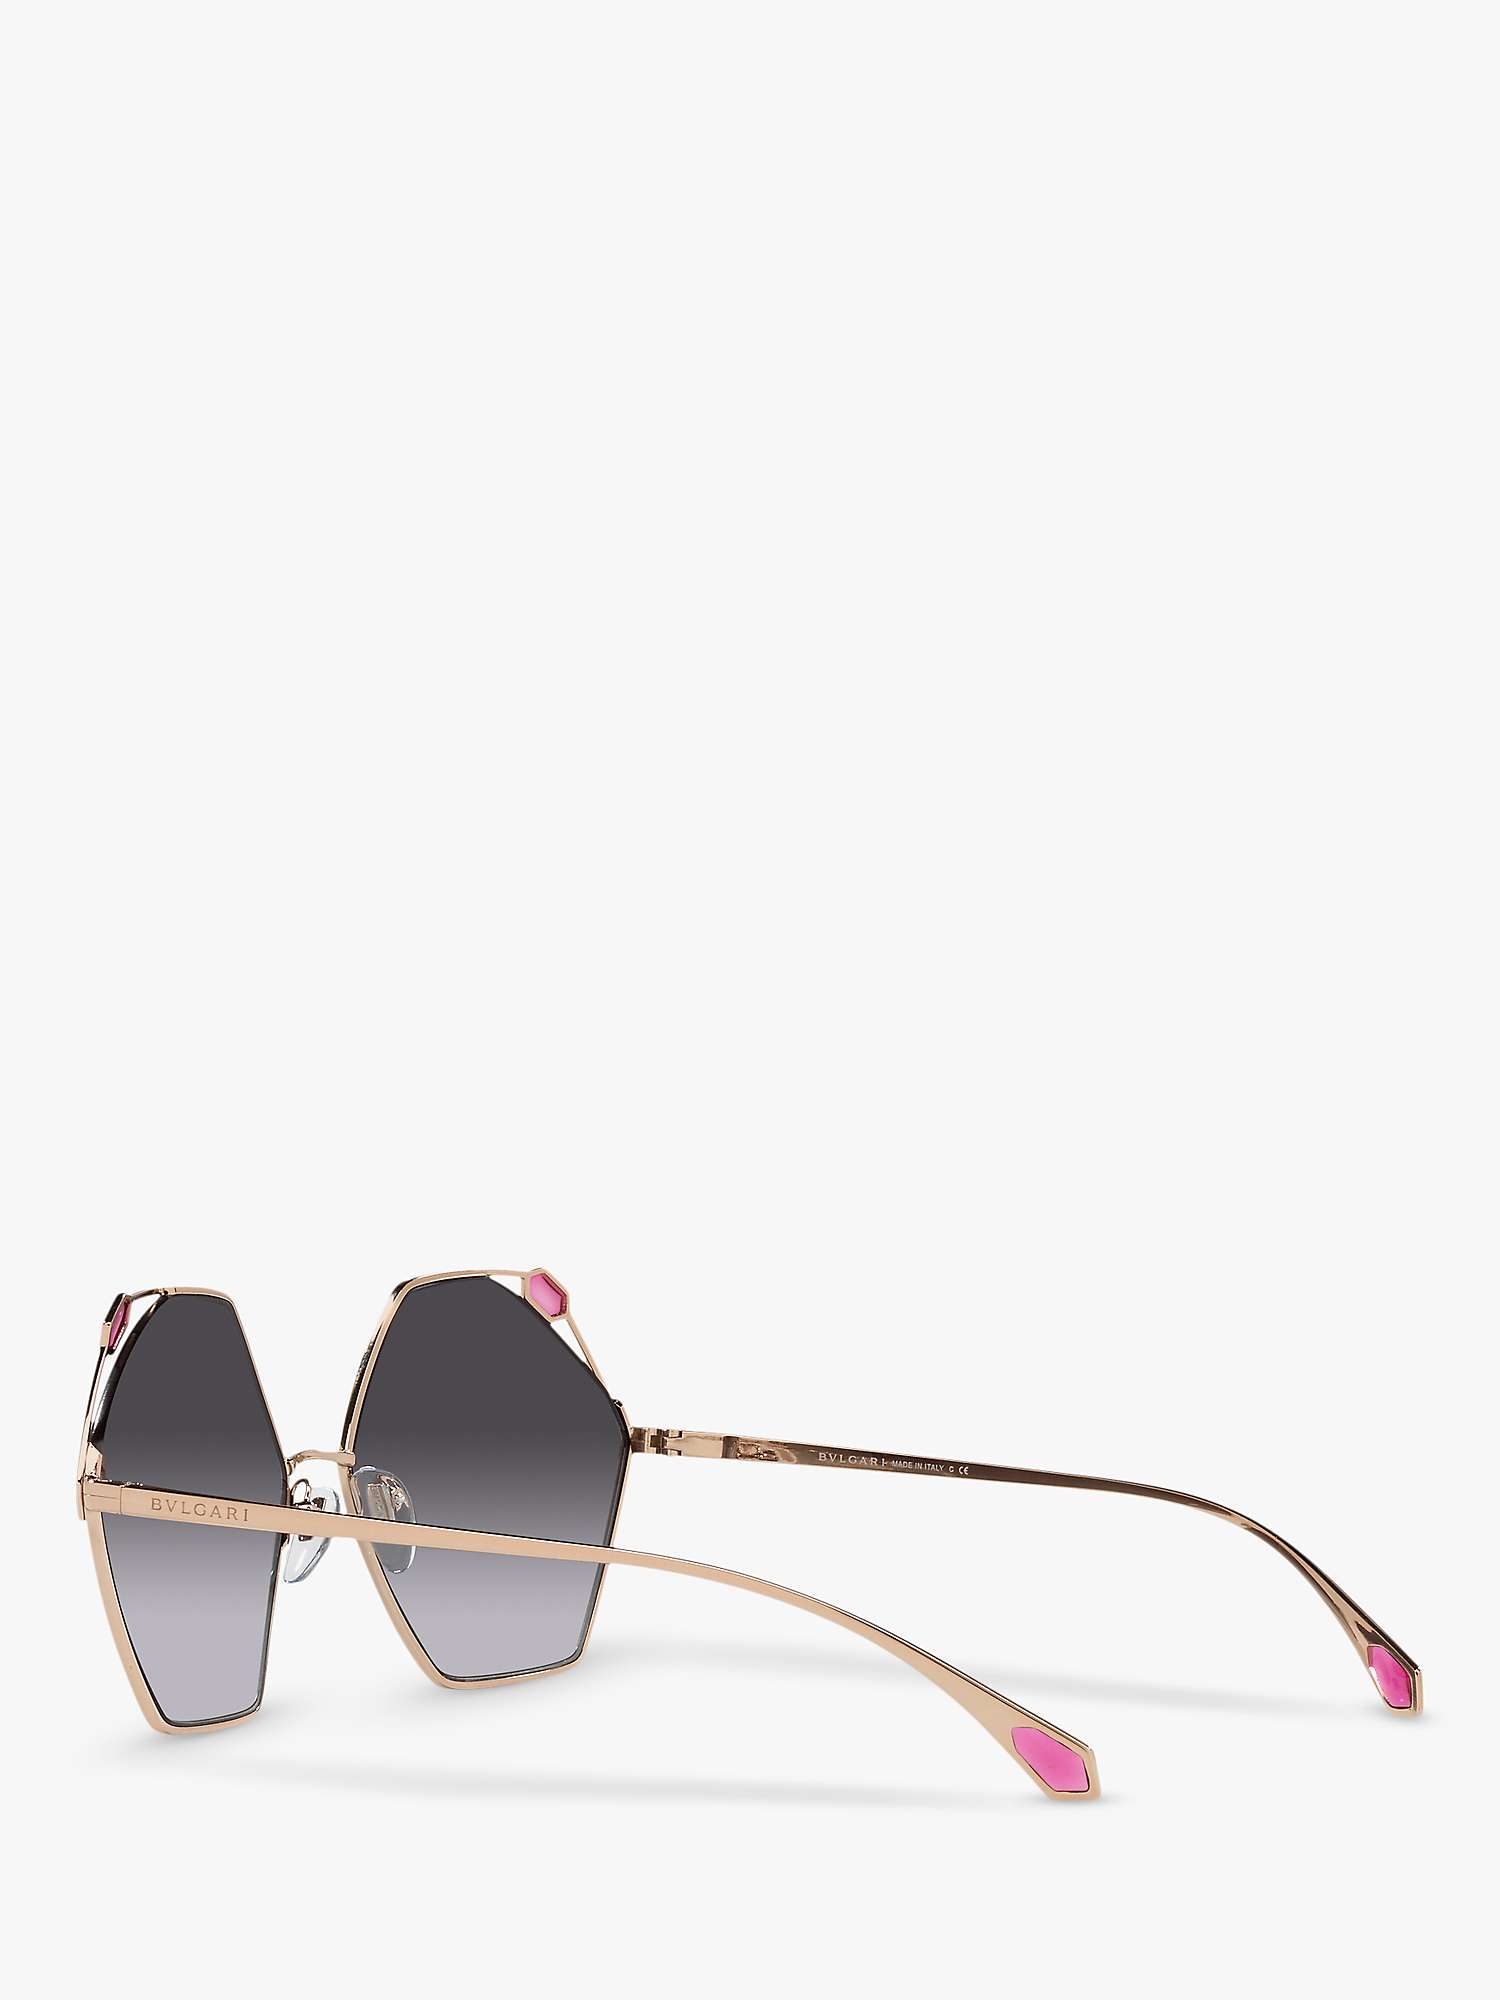 Buy BVLGARI BV6160 Women's Irregular Sunglasses, Gold/Grey Gradient Online at johnlewis.com